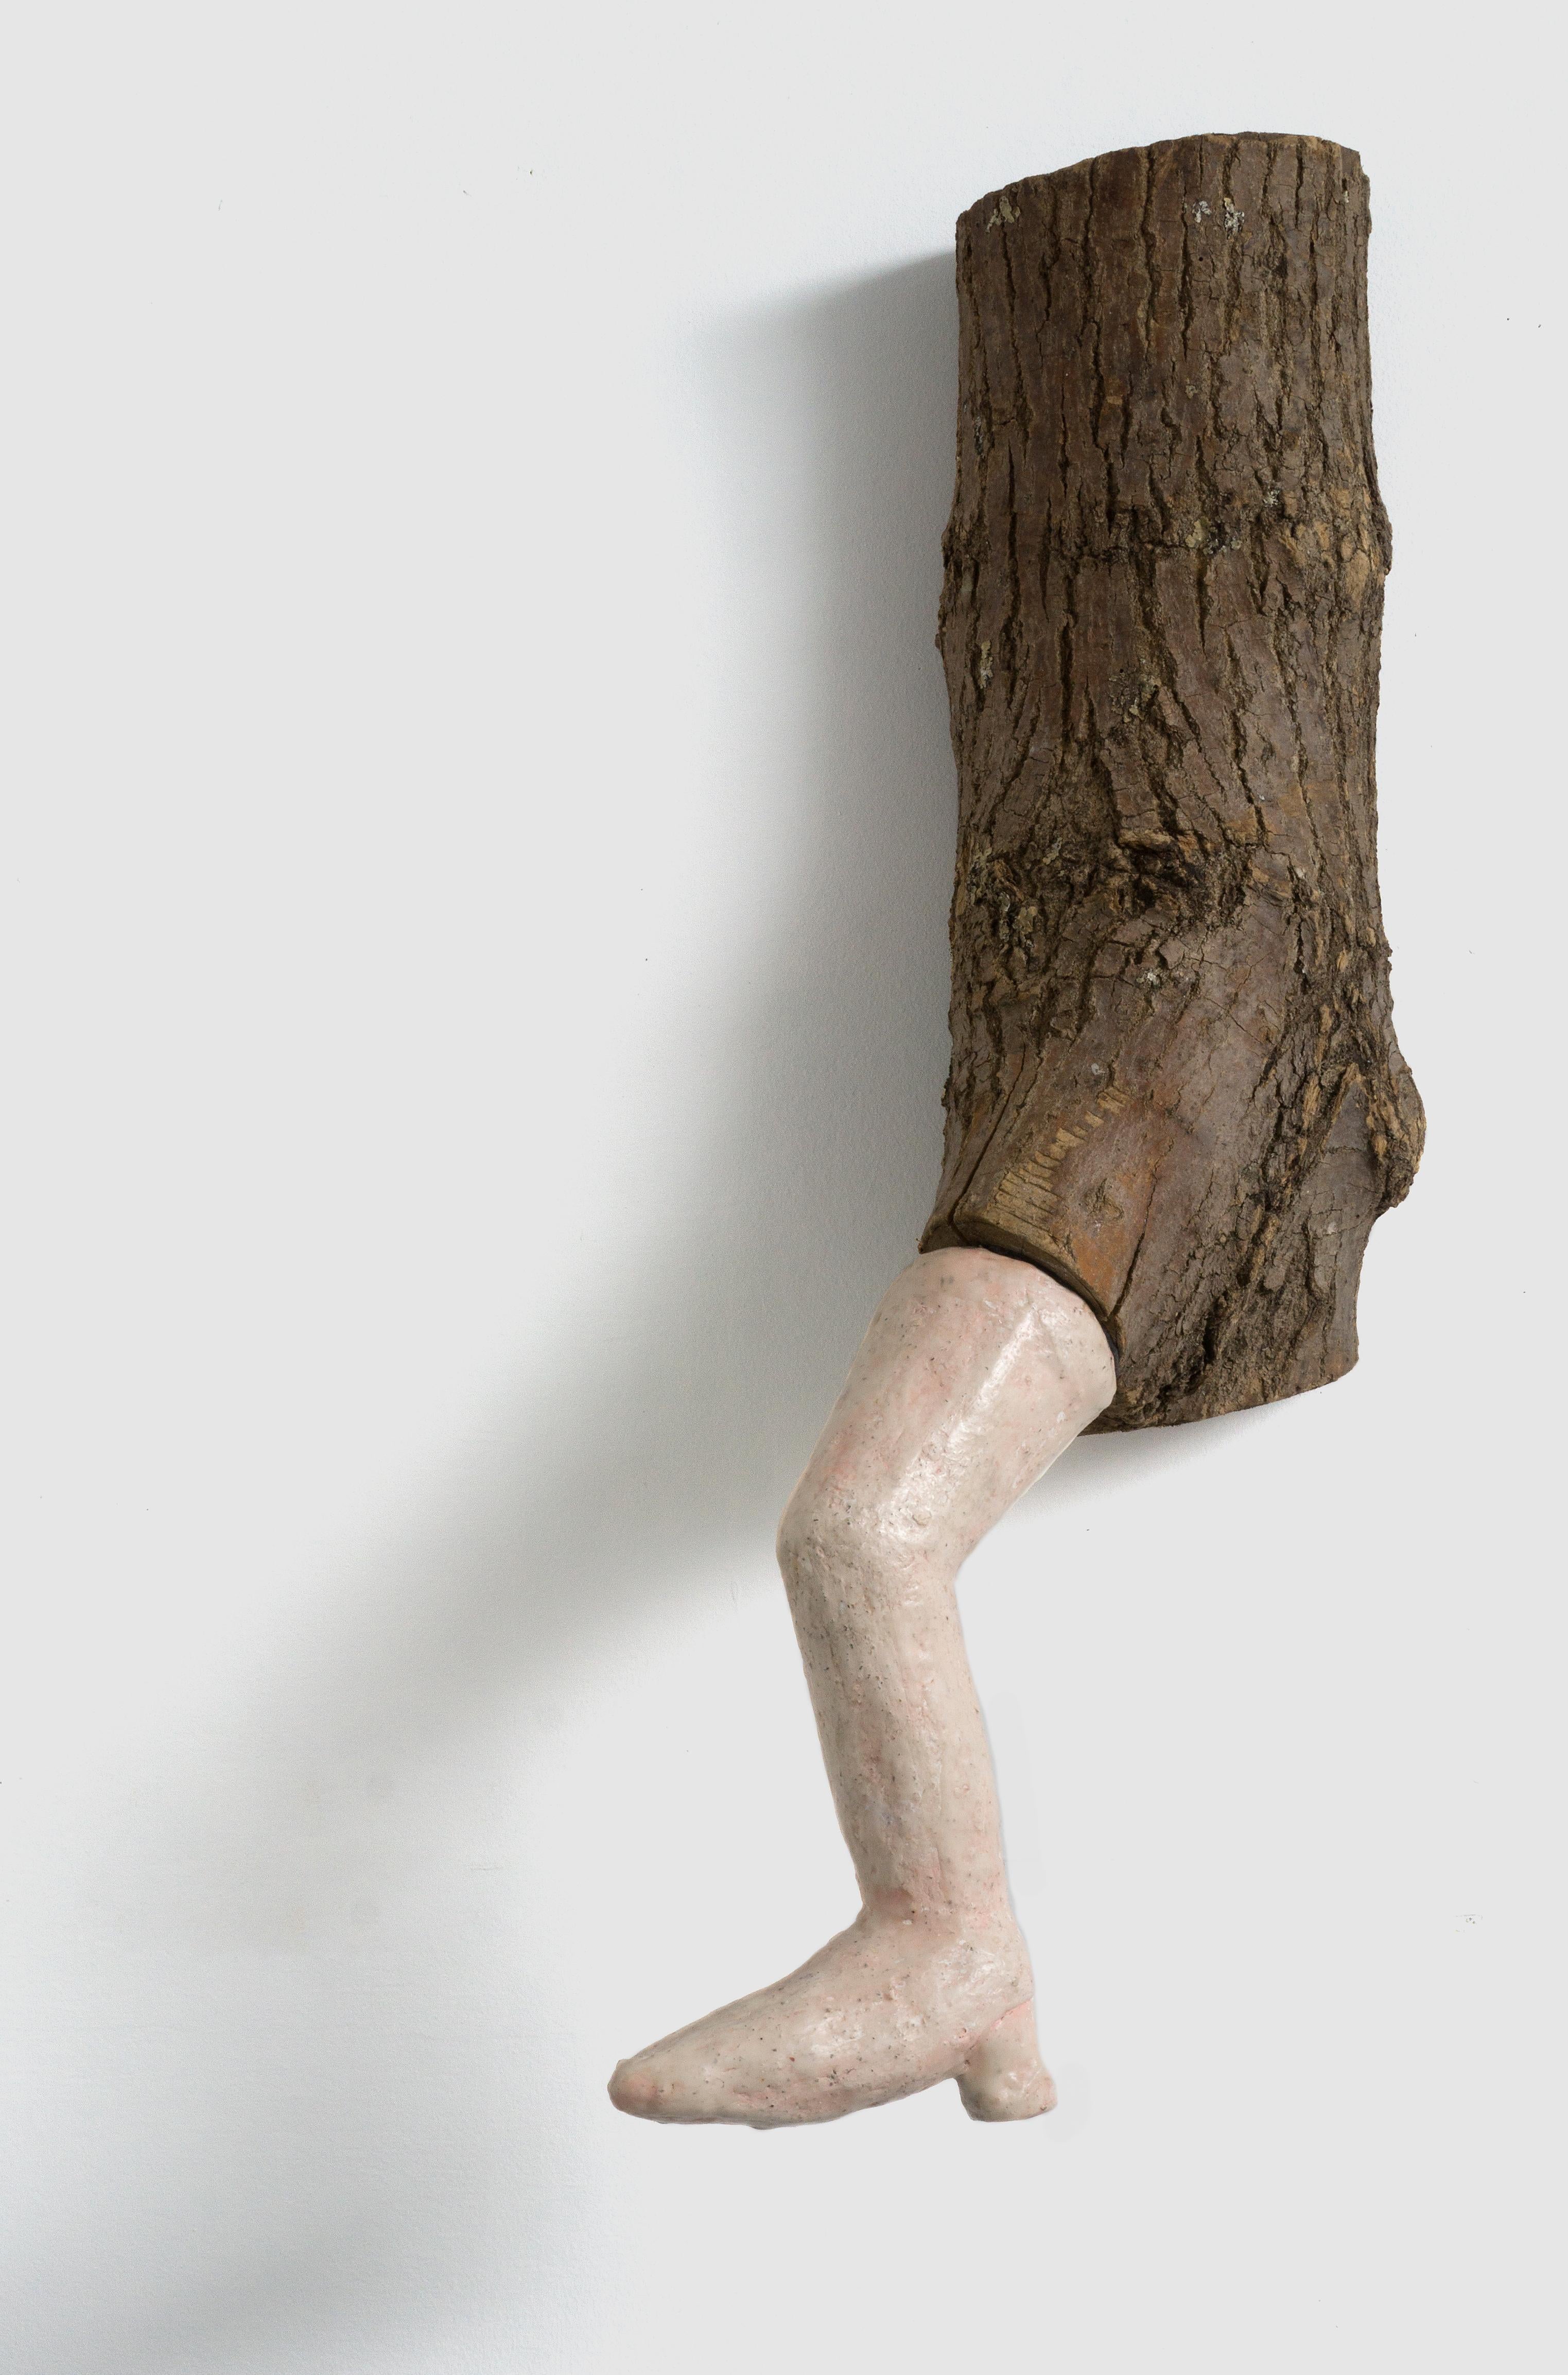 Pink Leg, outsider art figurative assemblage - Mixed Media Art by Melissa Stern